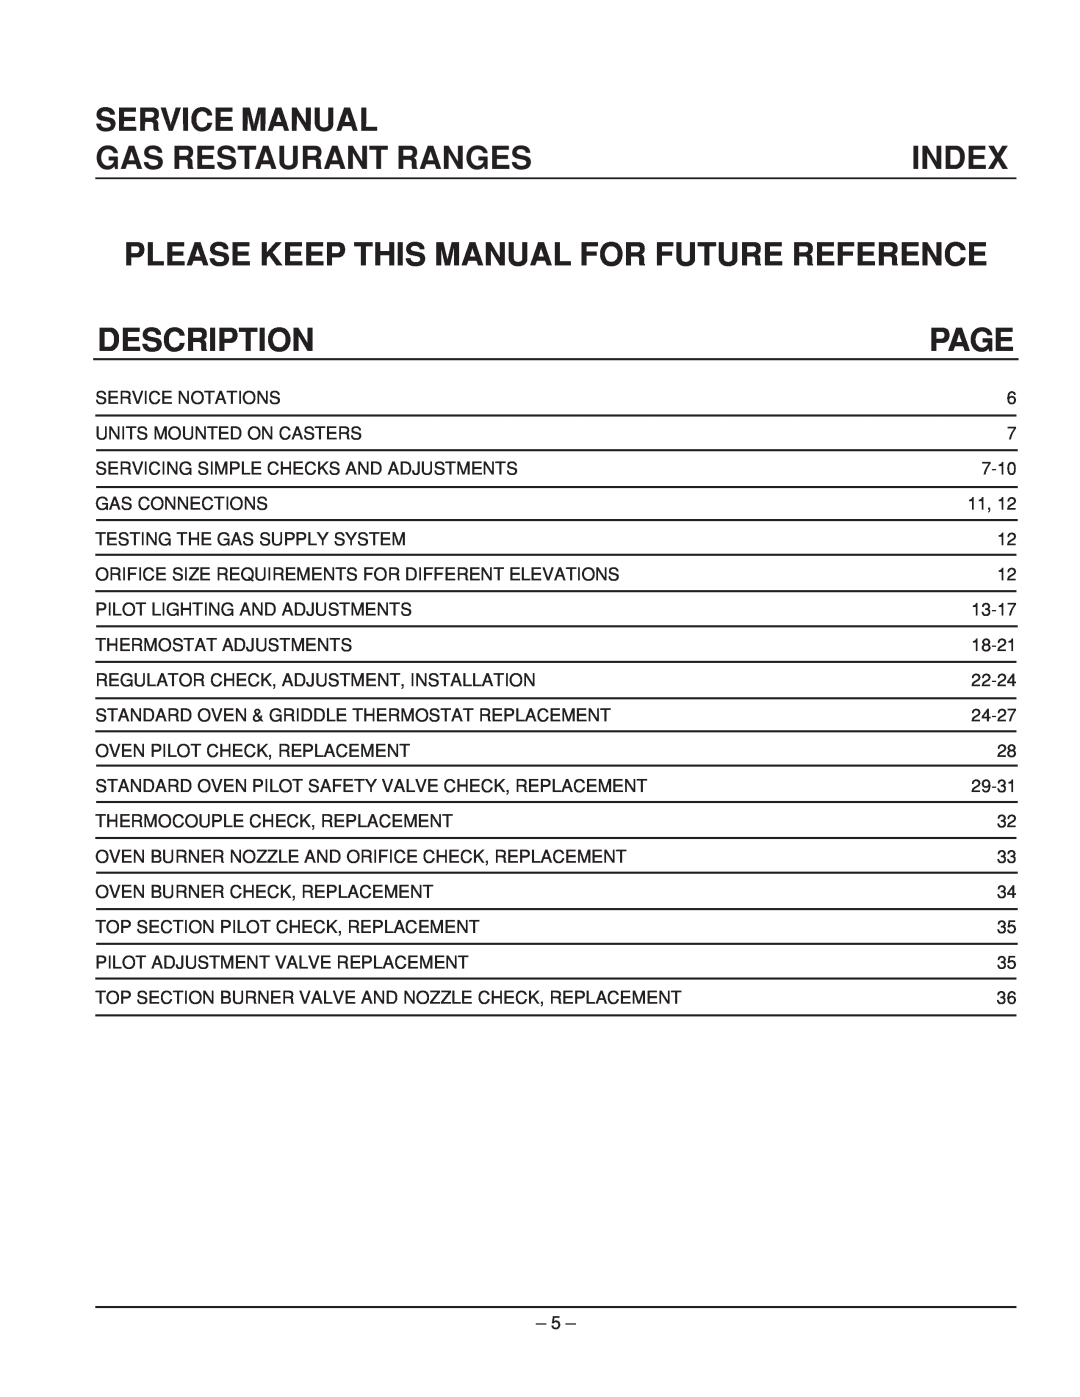 Vulcan-Hart EG48, EG160, EG60 Gas Restaurant Ranges, Index, Please Keep This Manual For Future Reference, Description, Page 